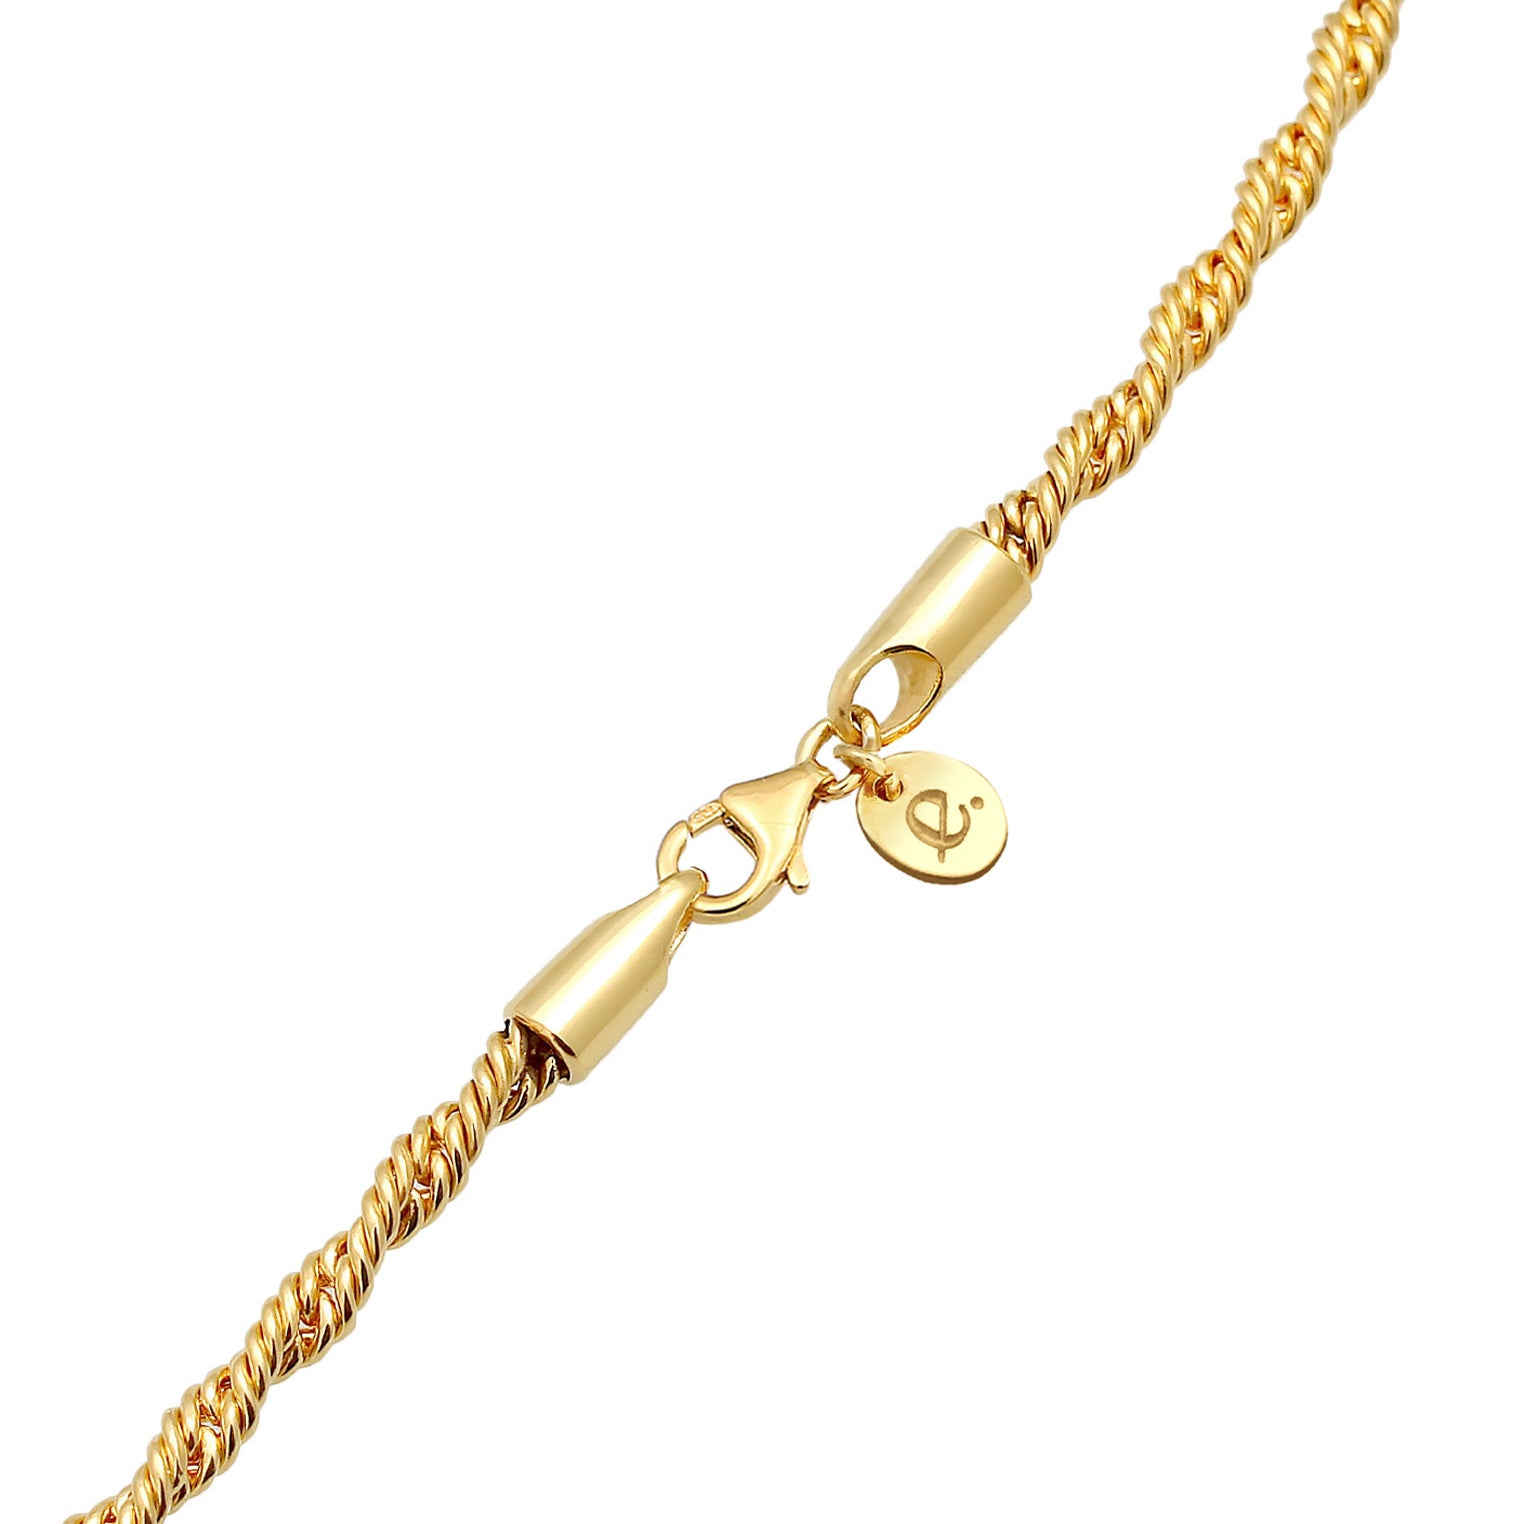 Gold - Elli PREMIUM | Kordel-Halskette | 925 Sterling Silber vergoldet